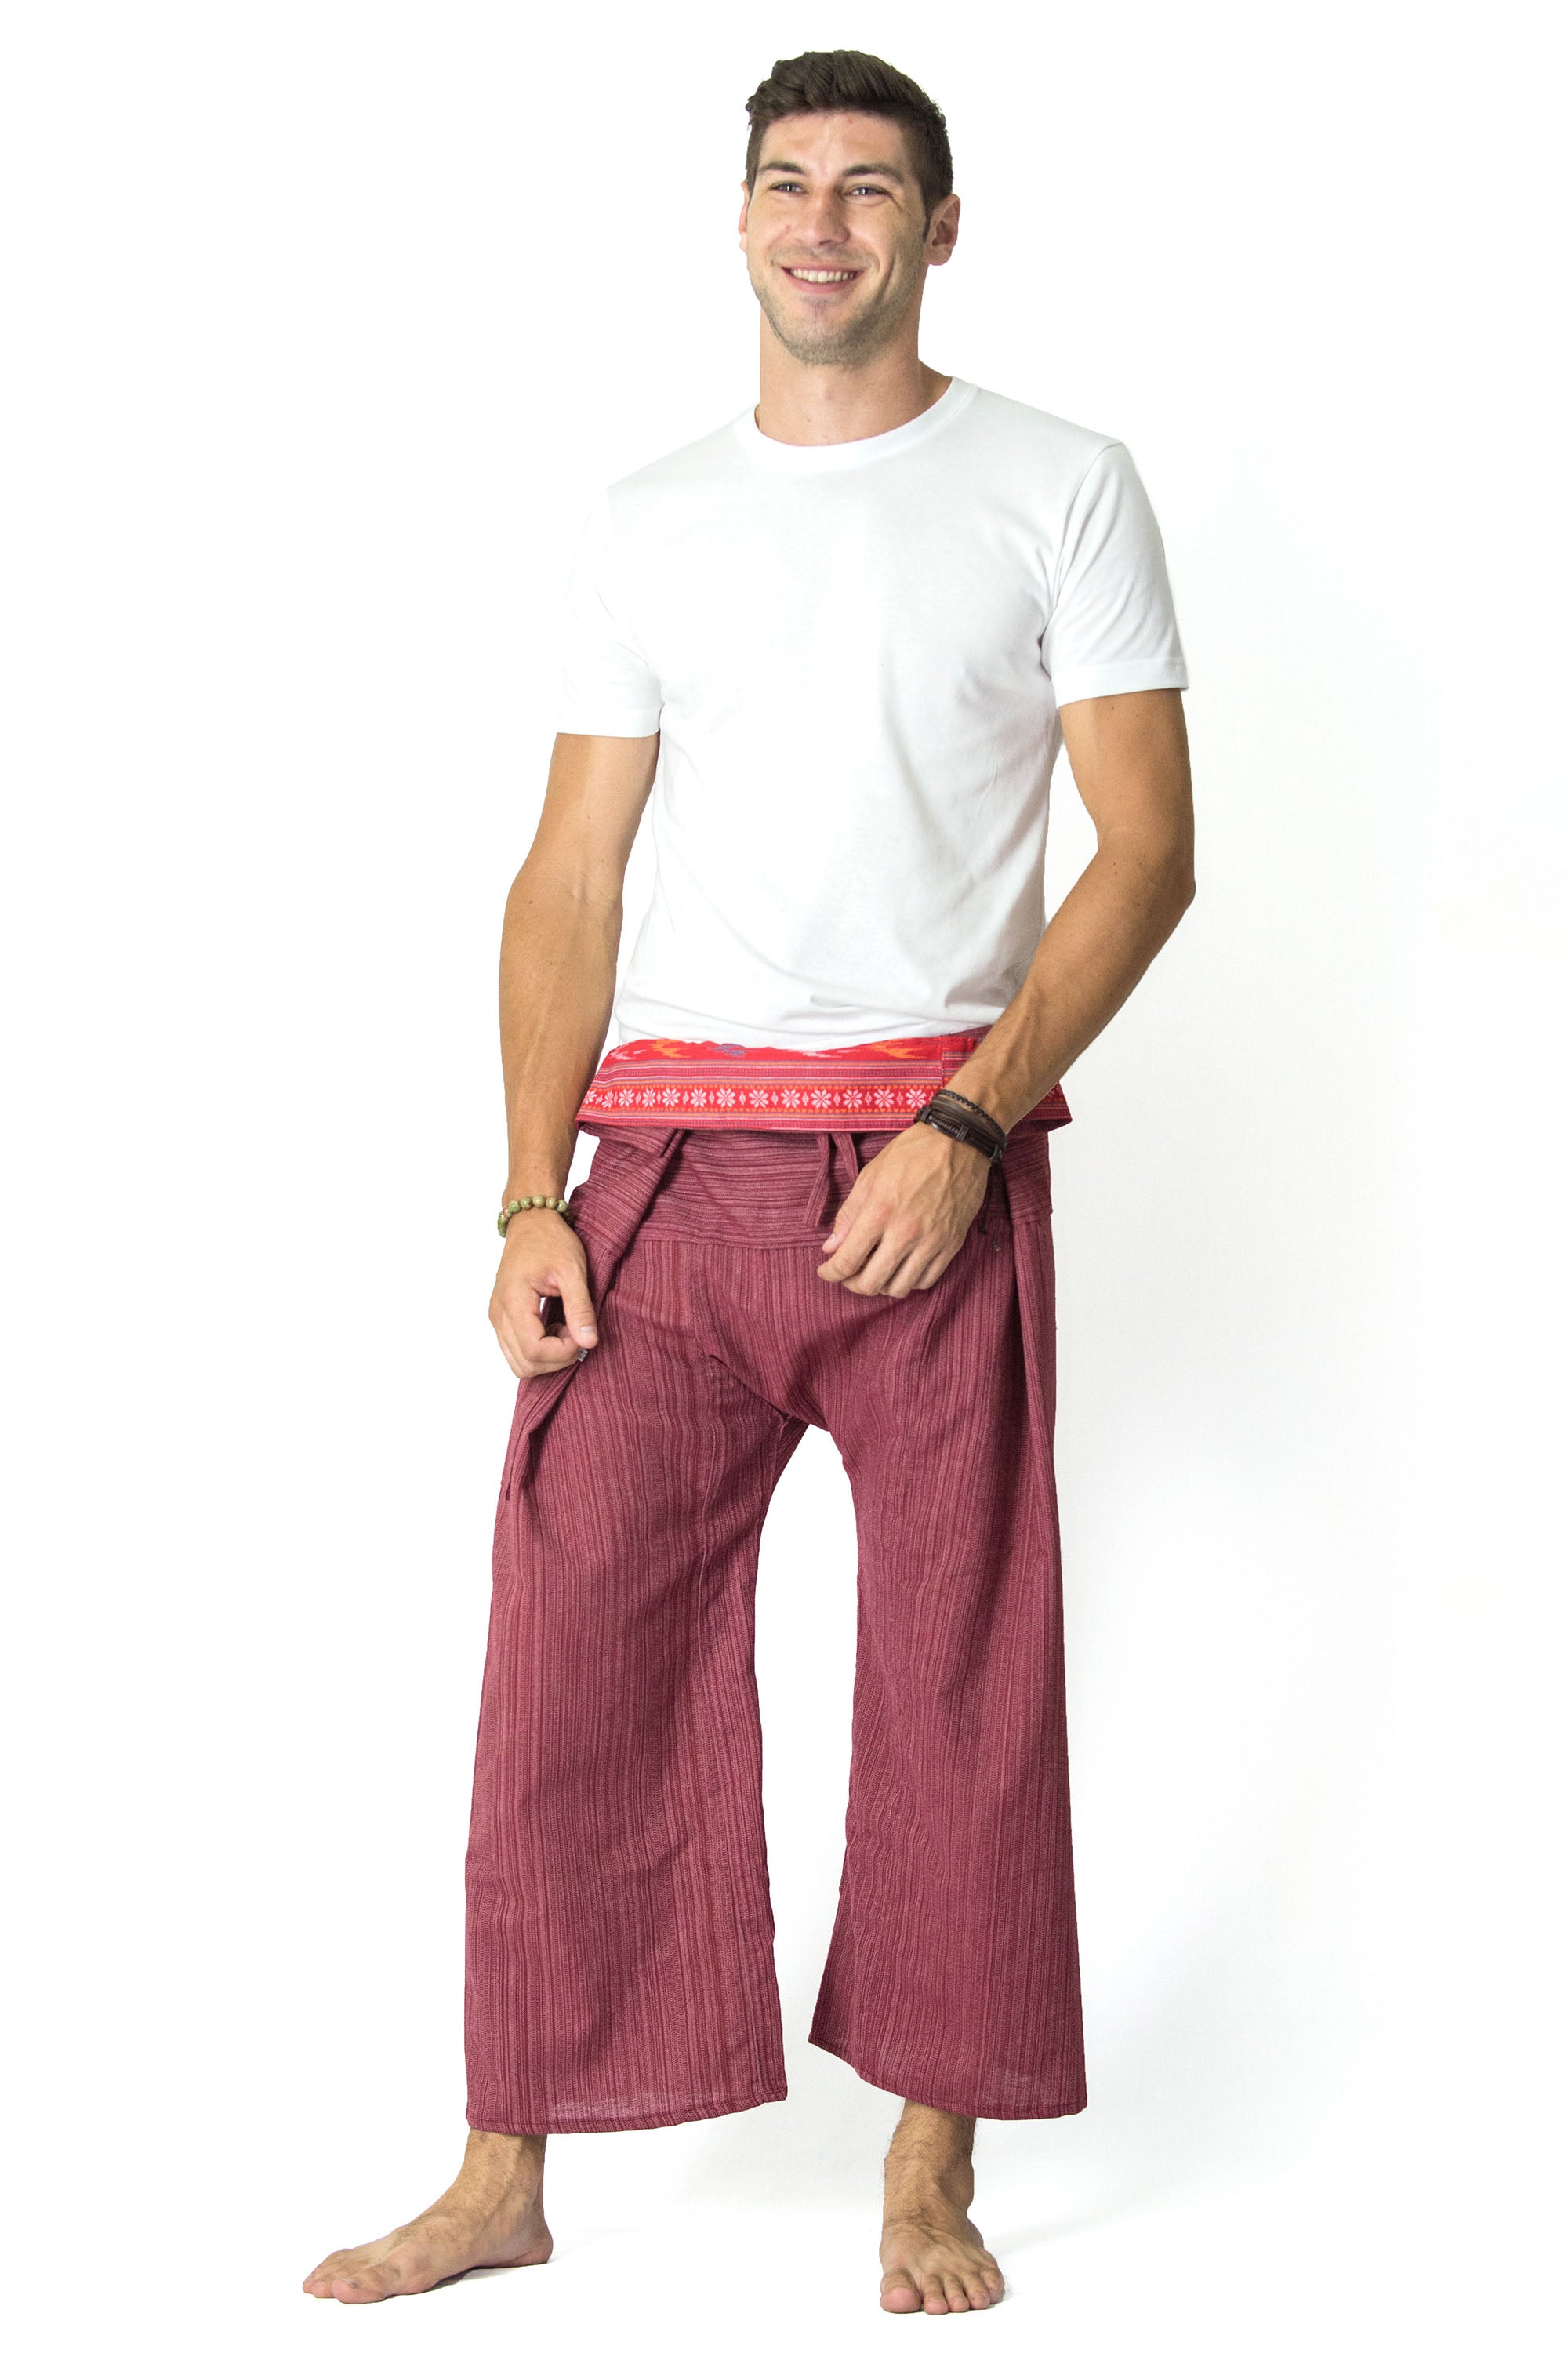 Thai fisherman pants - purple - extra long cotton